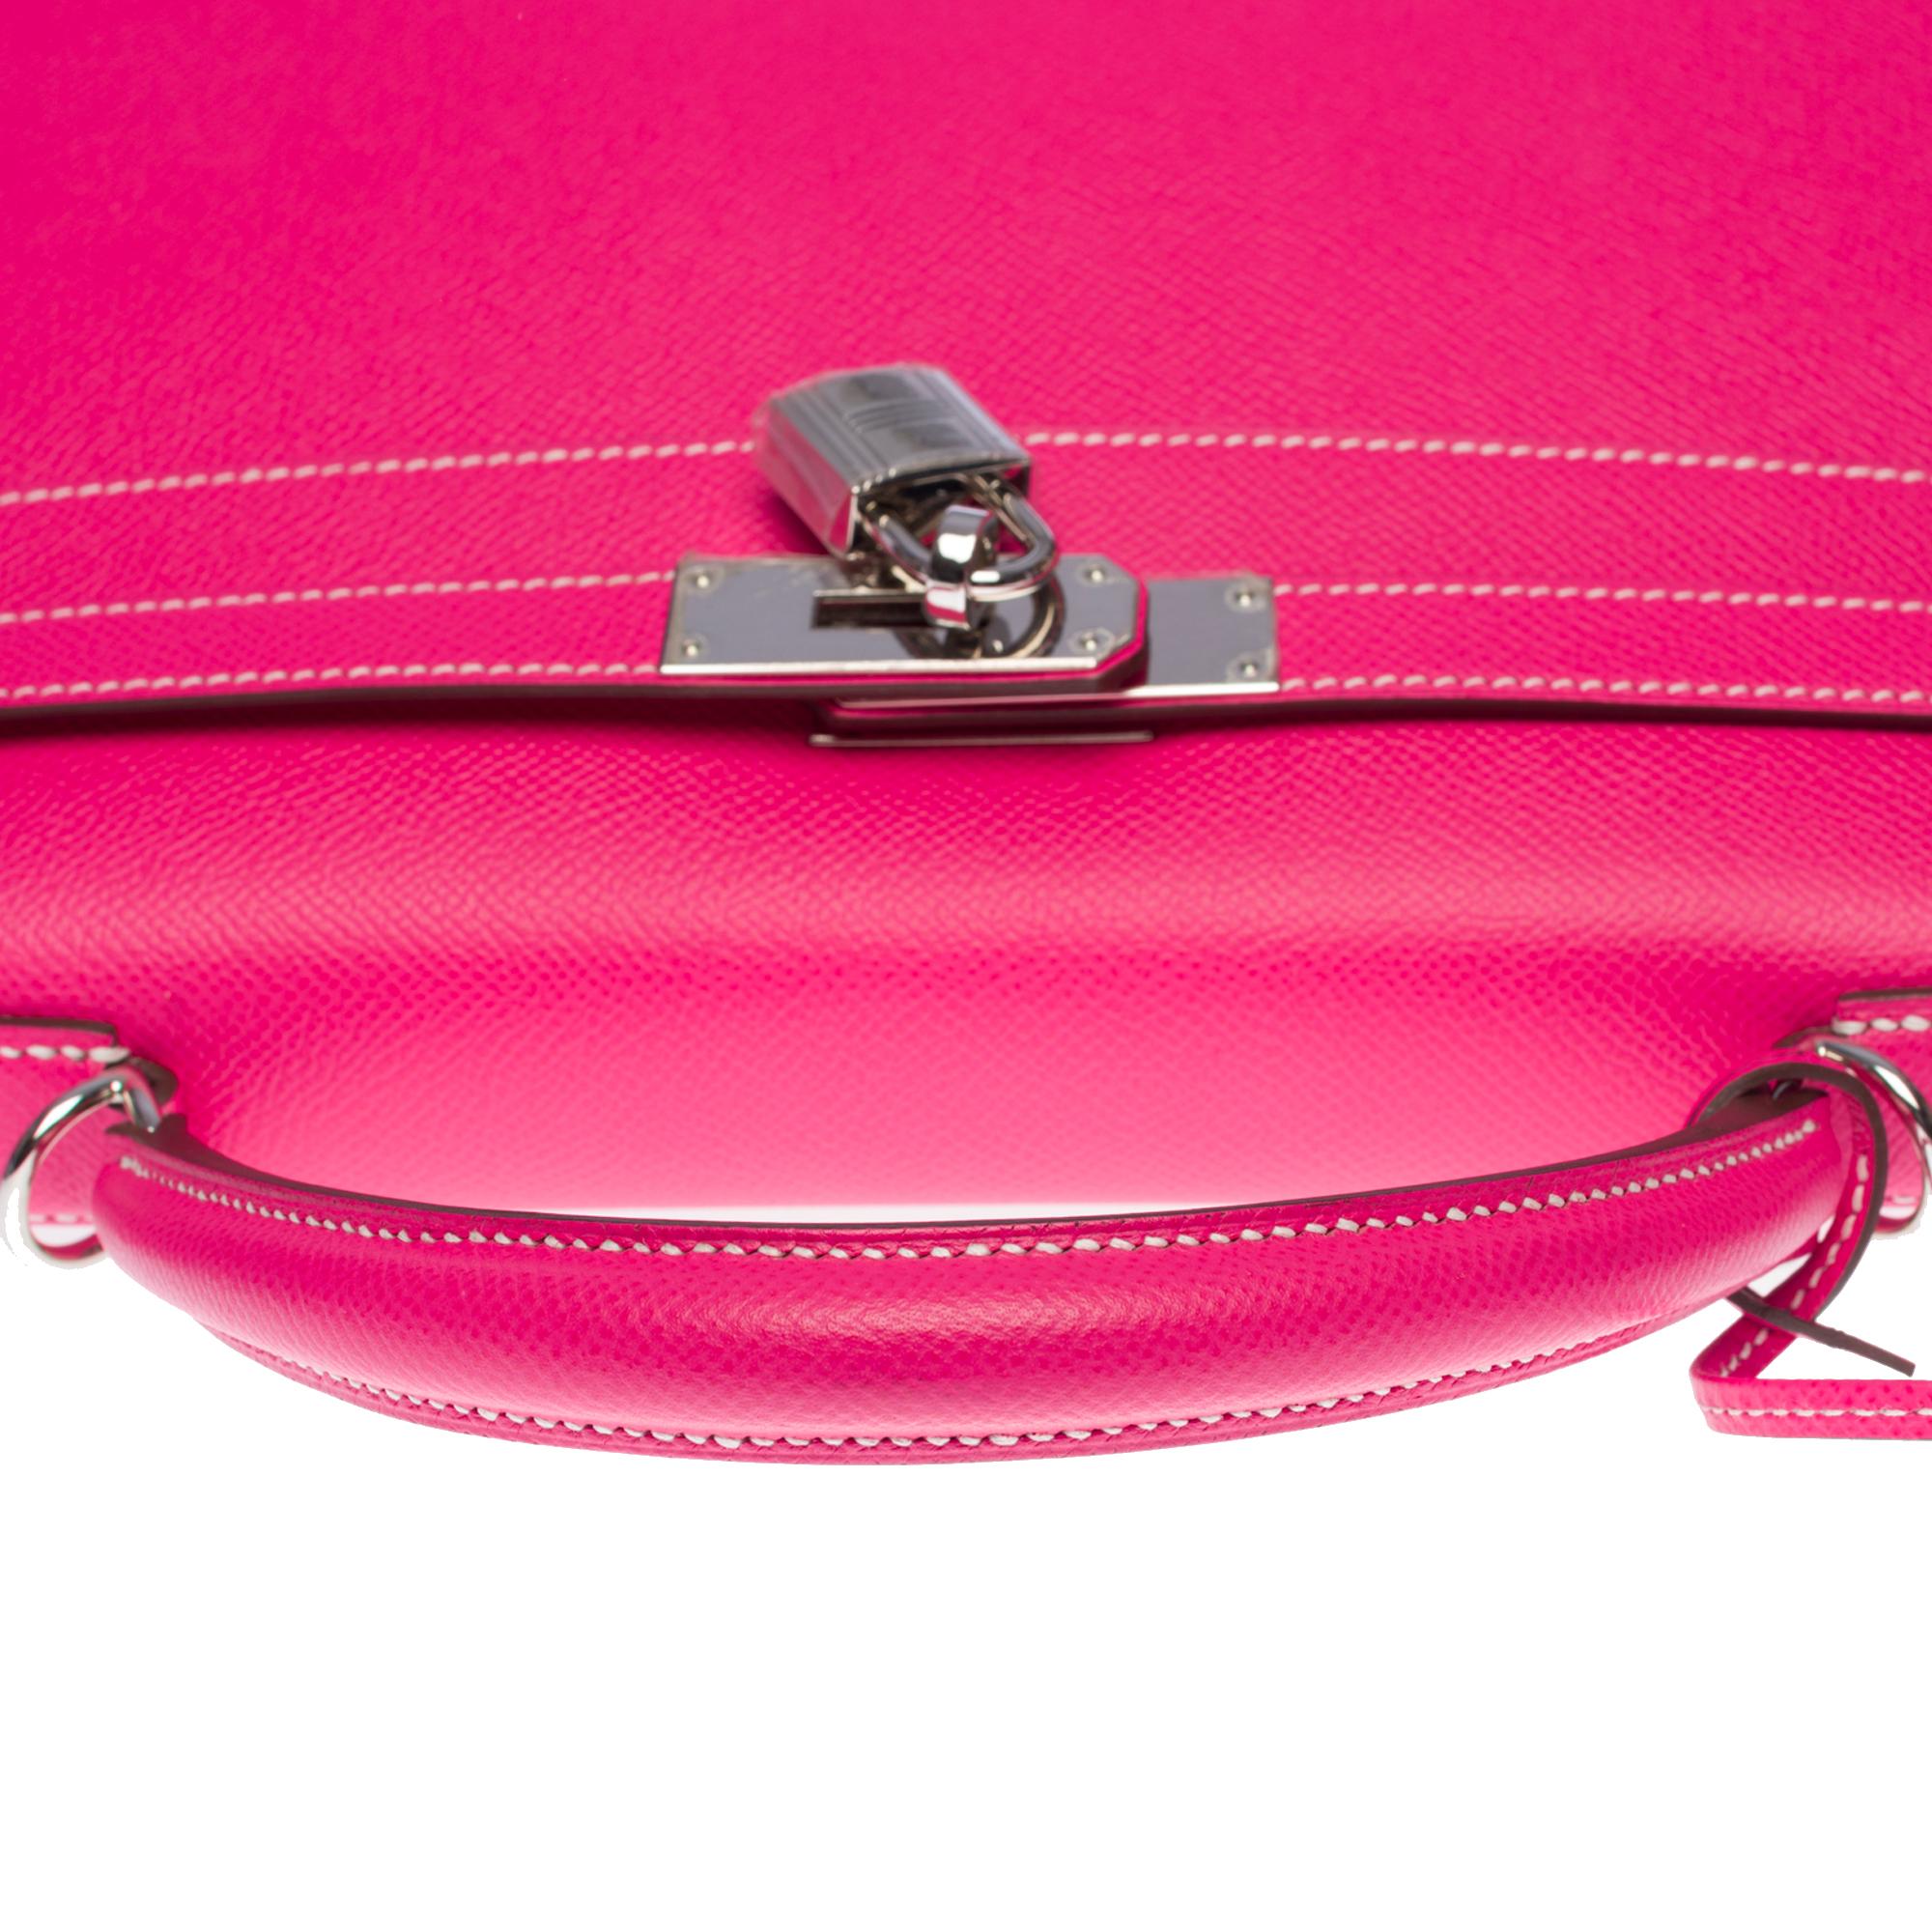 Hermès Kelly 32 sellier handbag strap in Rose lipstick epsom leather, SHW 4